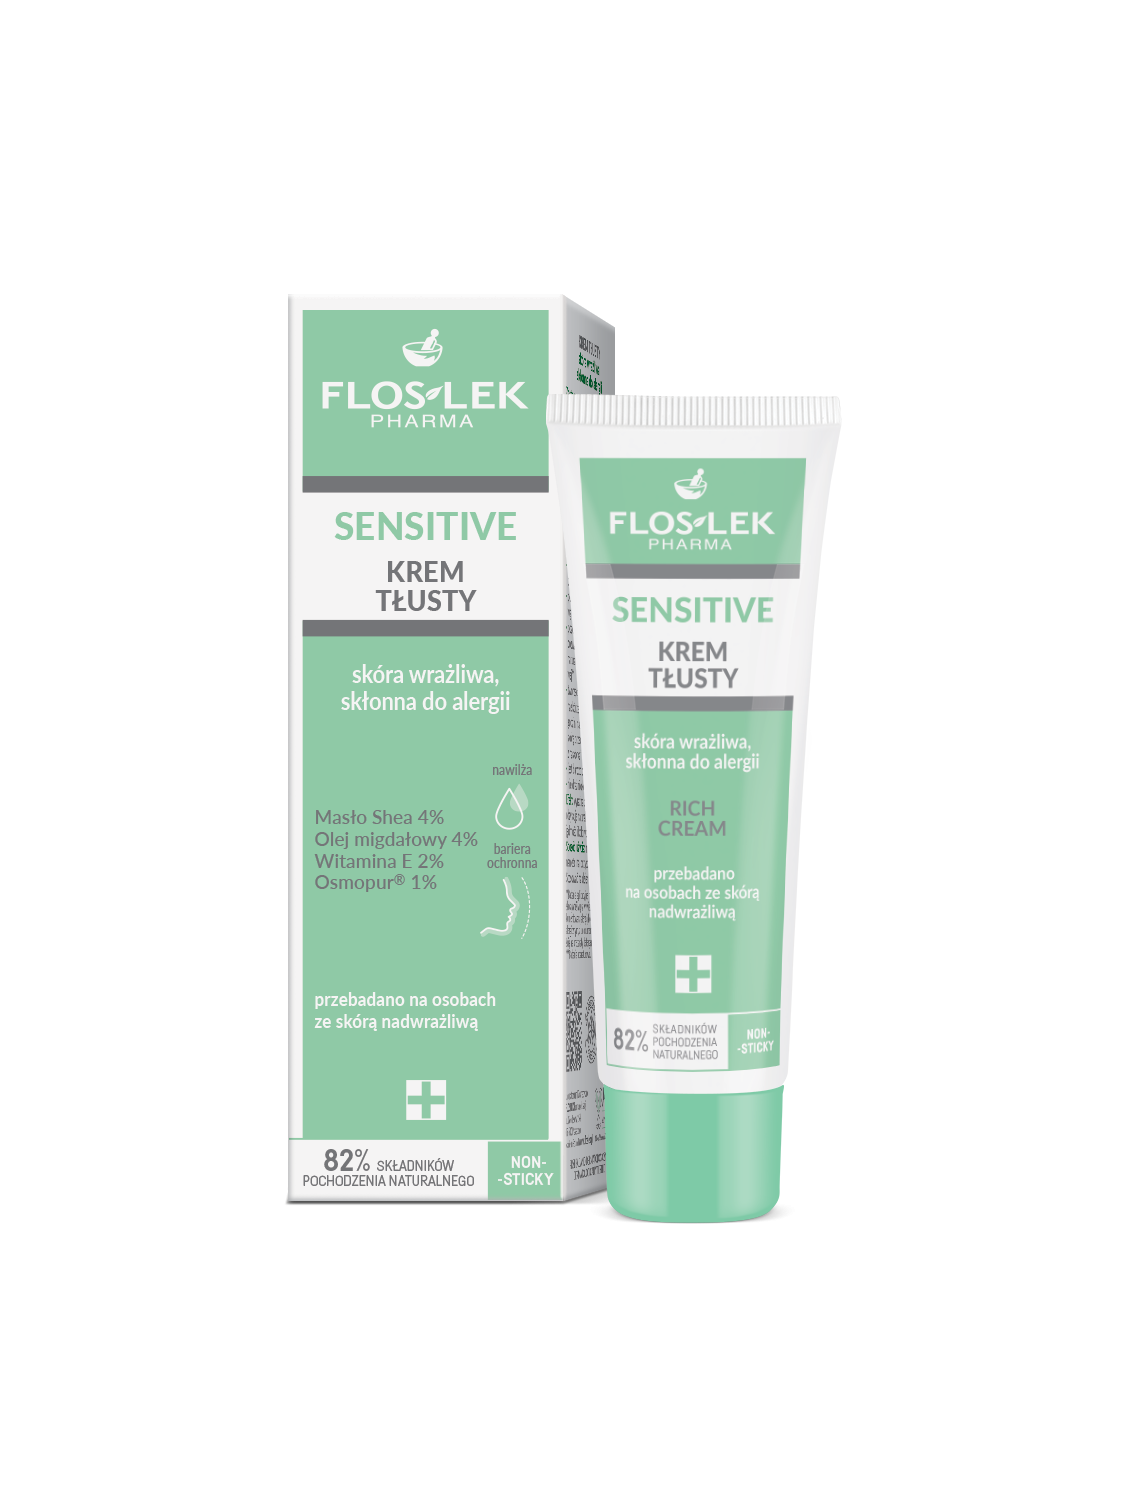 Floslek SENSITIVE Oily cream for sensitive skin